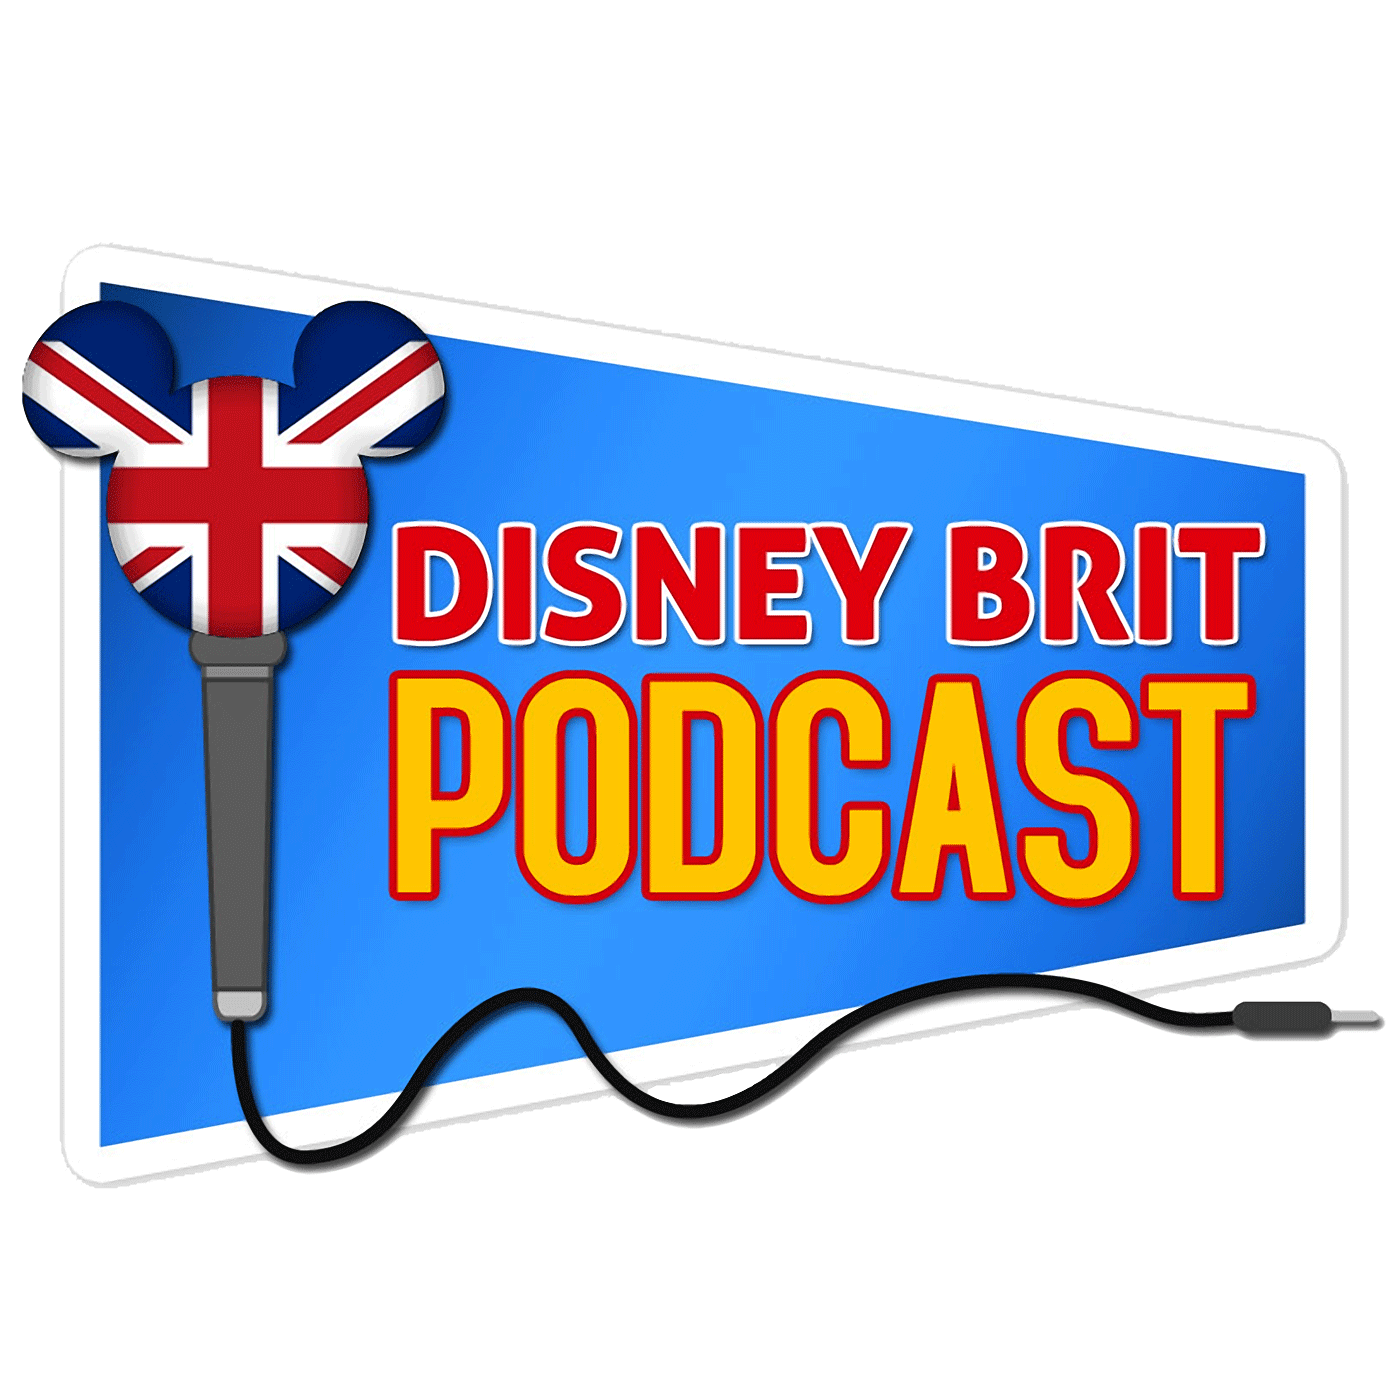 Disneybrit Podcast - Episode 116